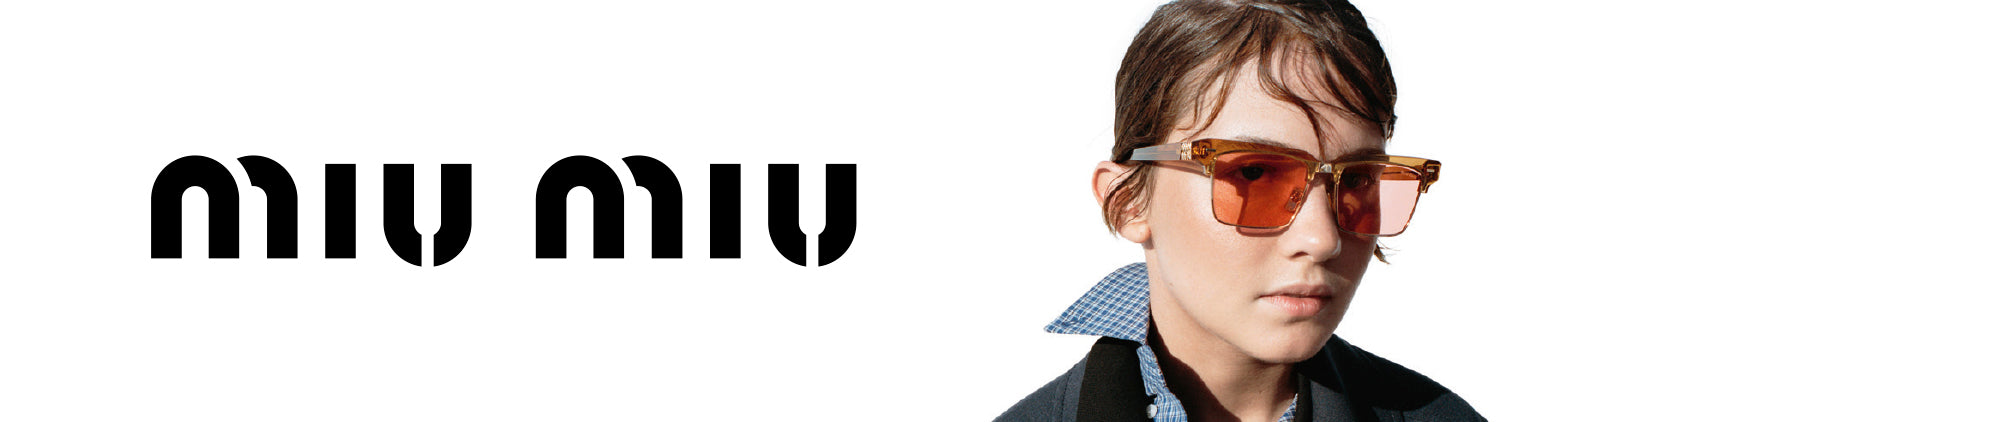 Miu Miu Eyewear Cat-Eye Frame tinted-lenses Sunglasses - Black